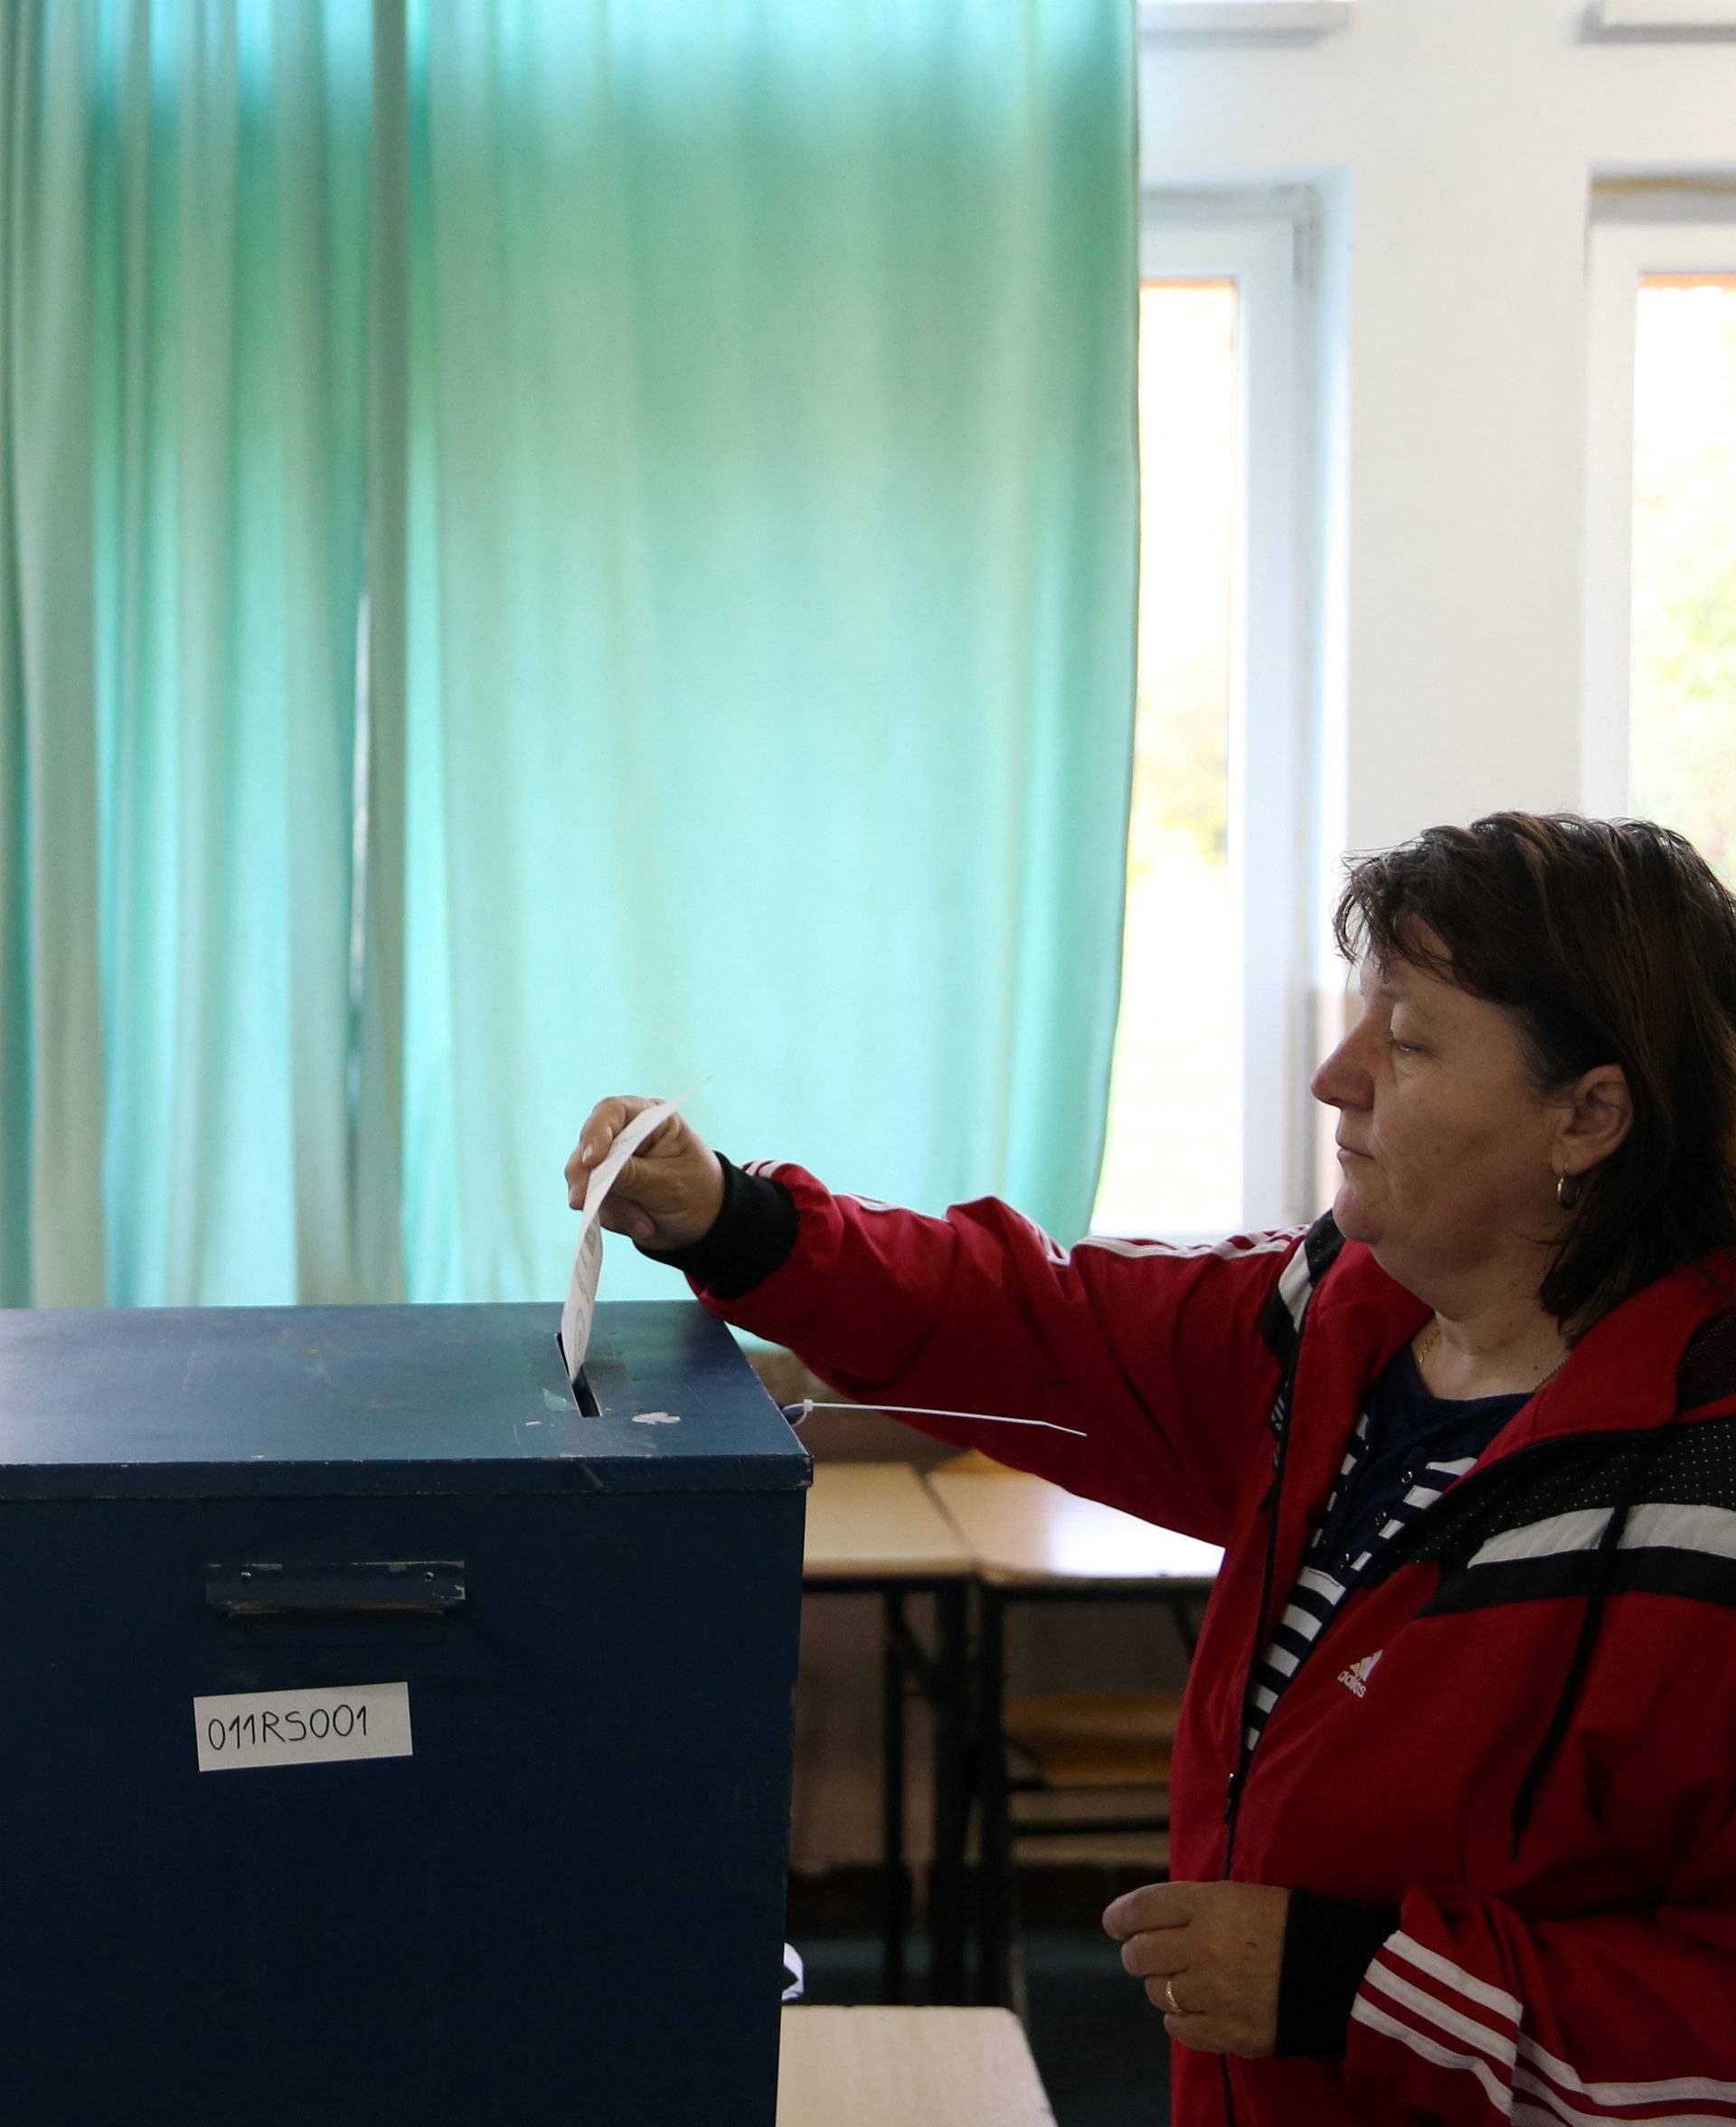 Woman votes for a referendum on their Statehood Day in Laktasi near Banja Luka